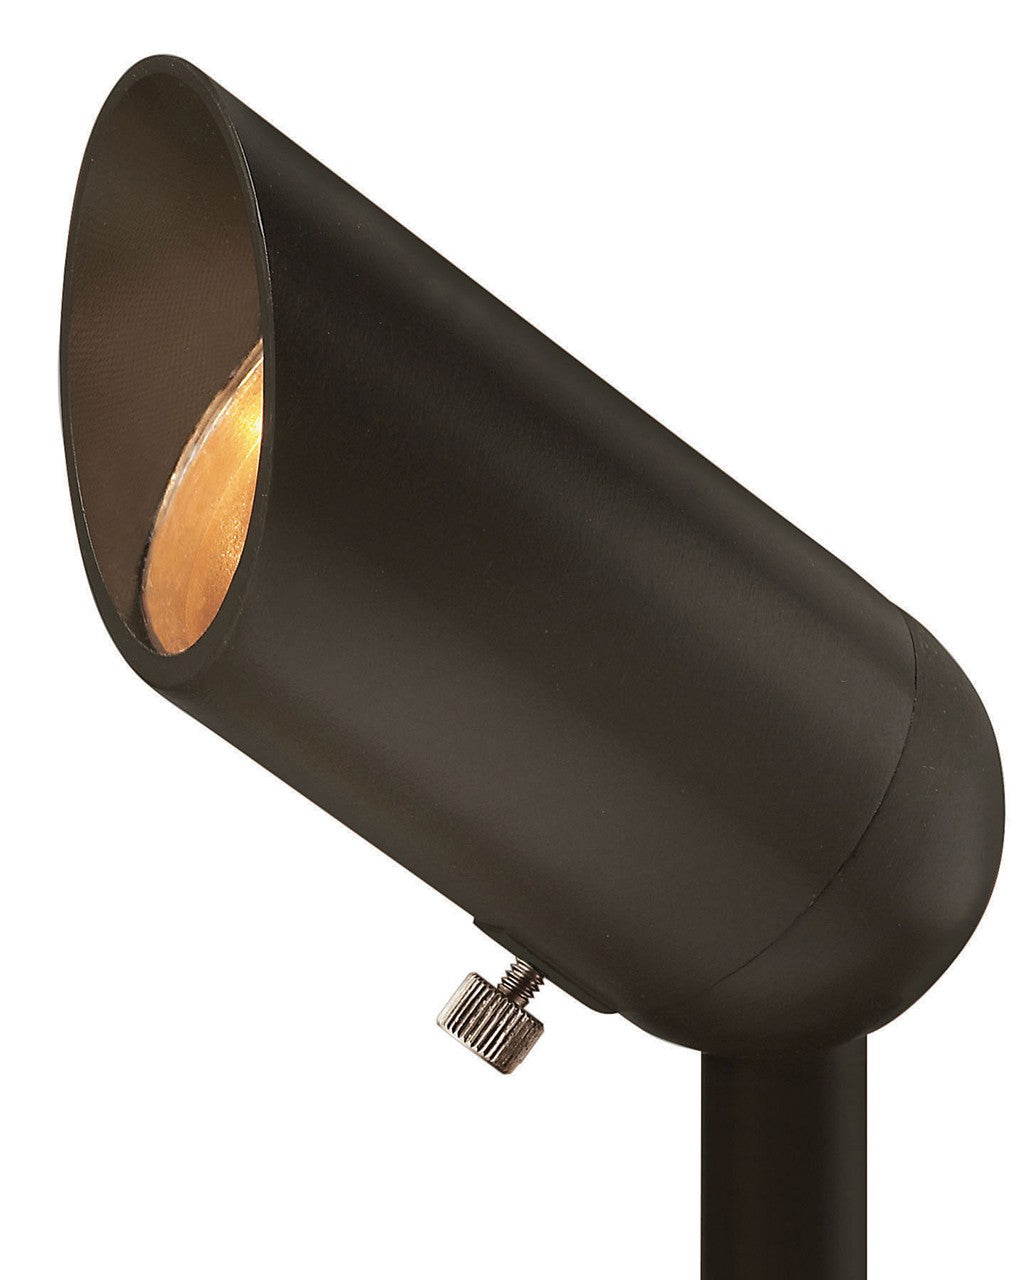 Hinkley Canada - LED Spot Light - Lumacore Accent Spot Light - Bronze- Union Lighting Luminaires Decor